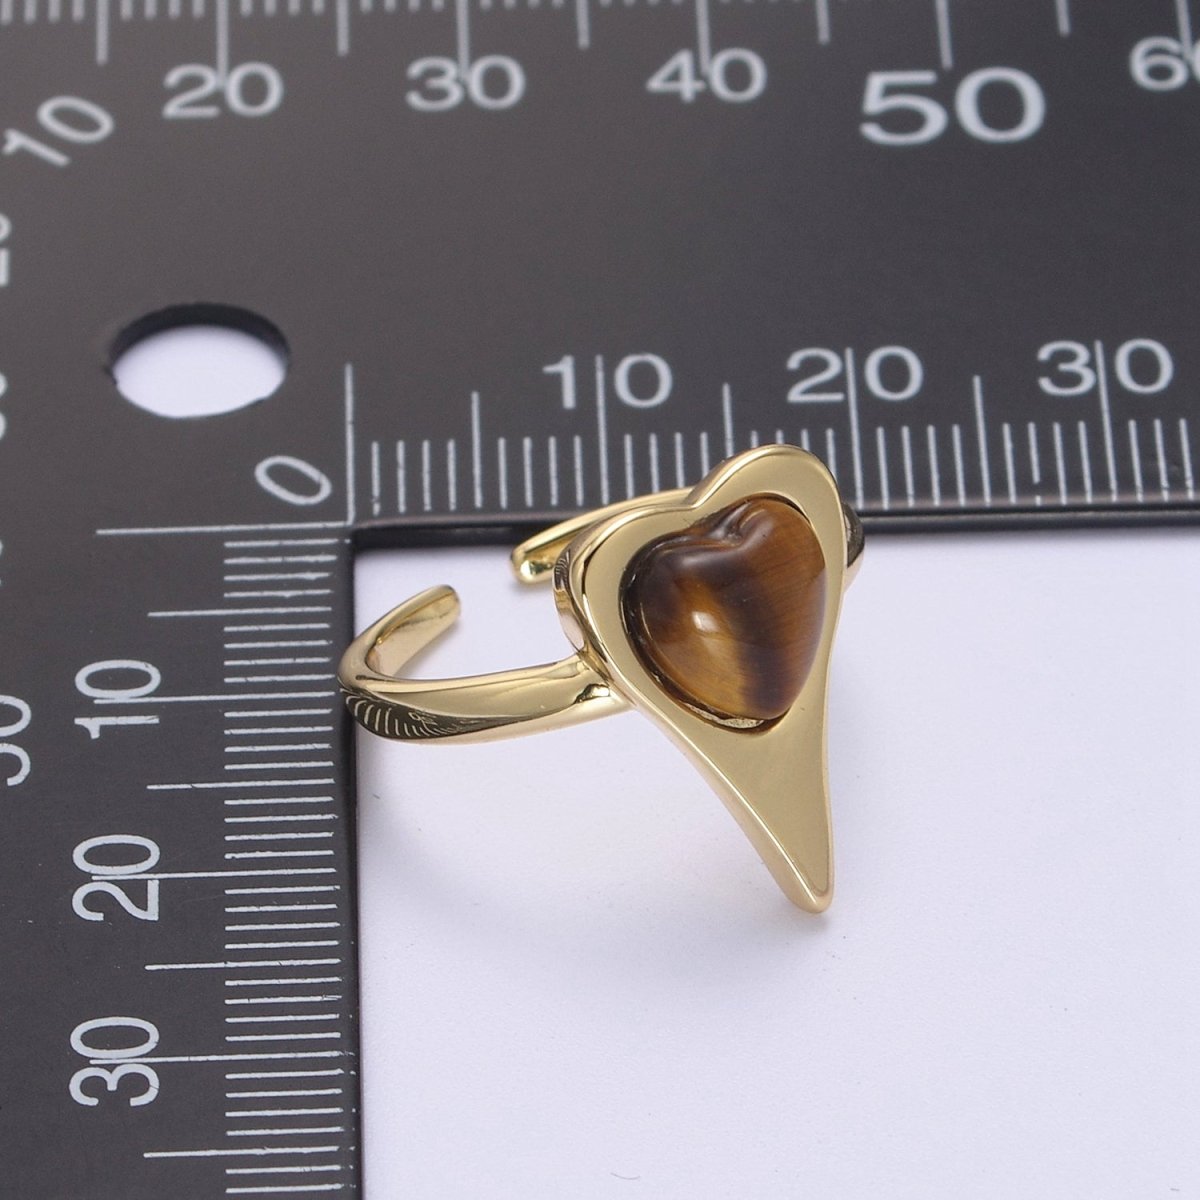 Tiger Eye Beads Heart Ring in 14k Gold Filled Open Adjustable Gemstone Ring U-235 - DLUXCA